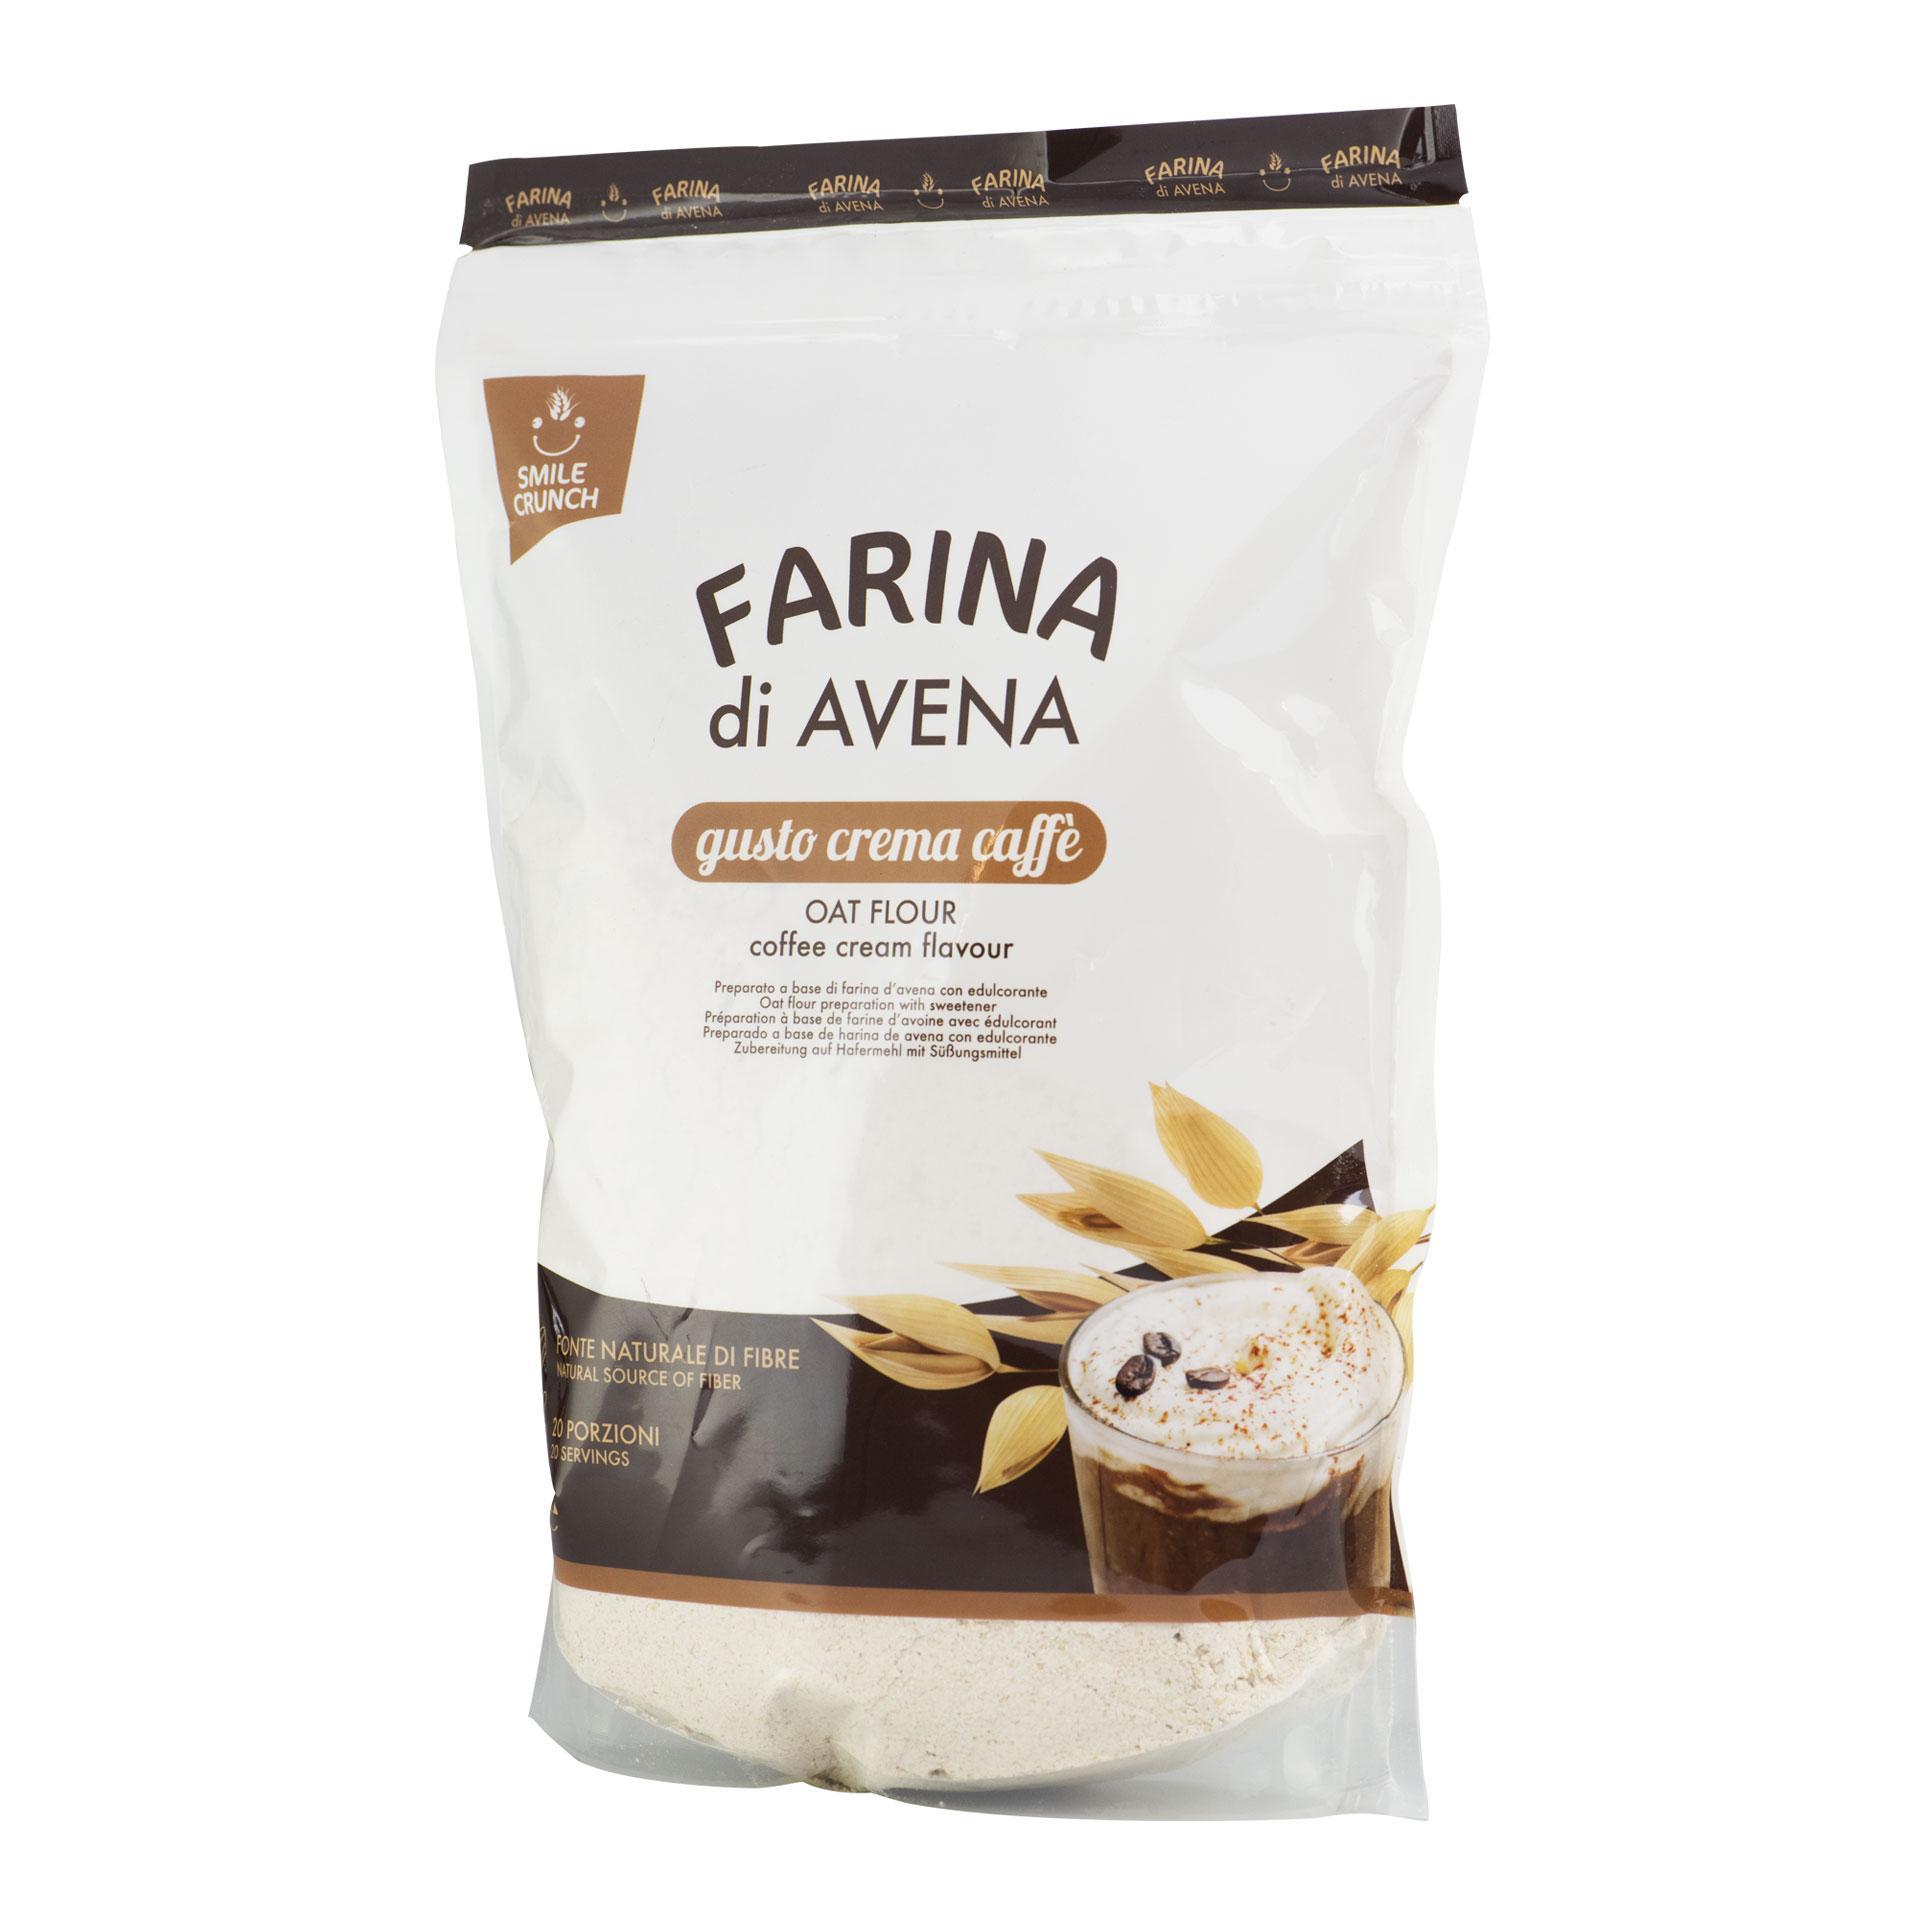 smile crunch oat flour - farina d'avena istantanea gusto crema caffe' - 1kg